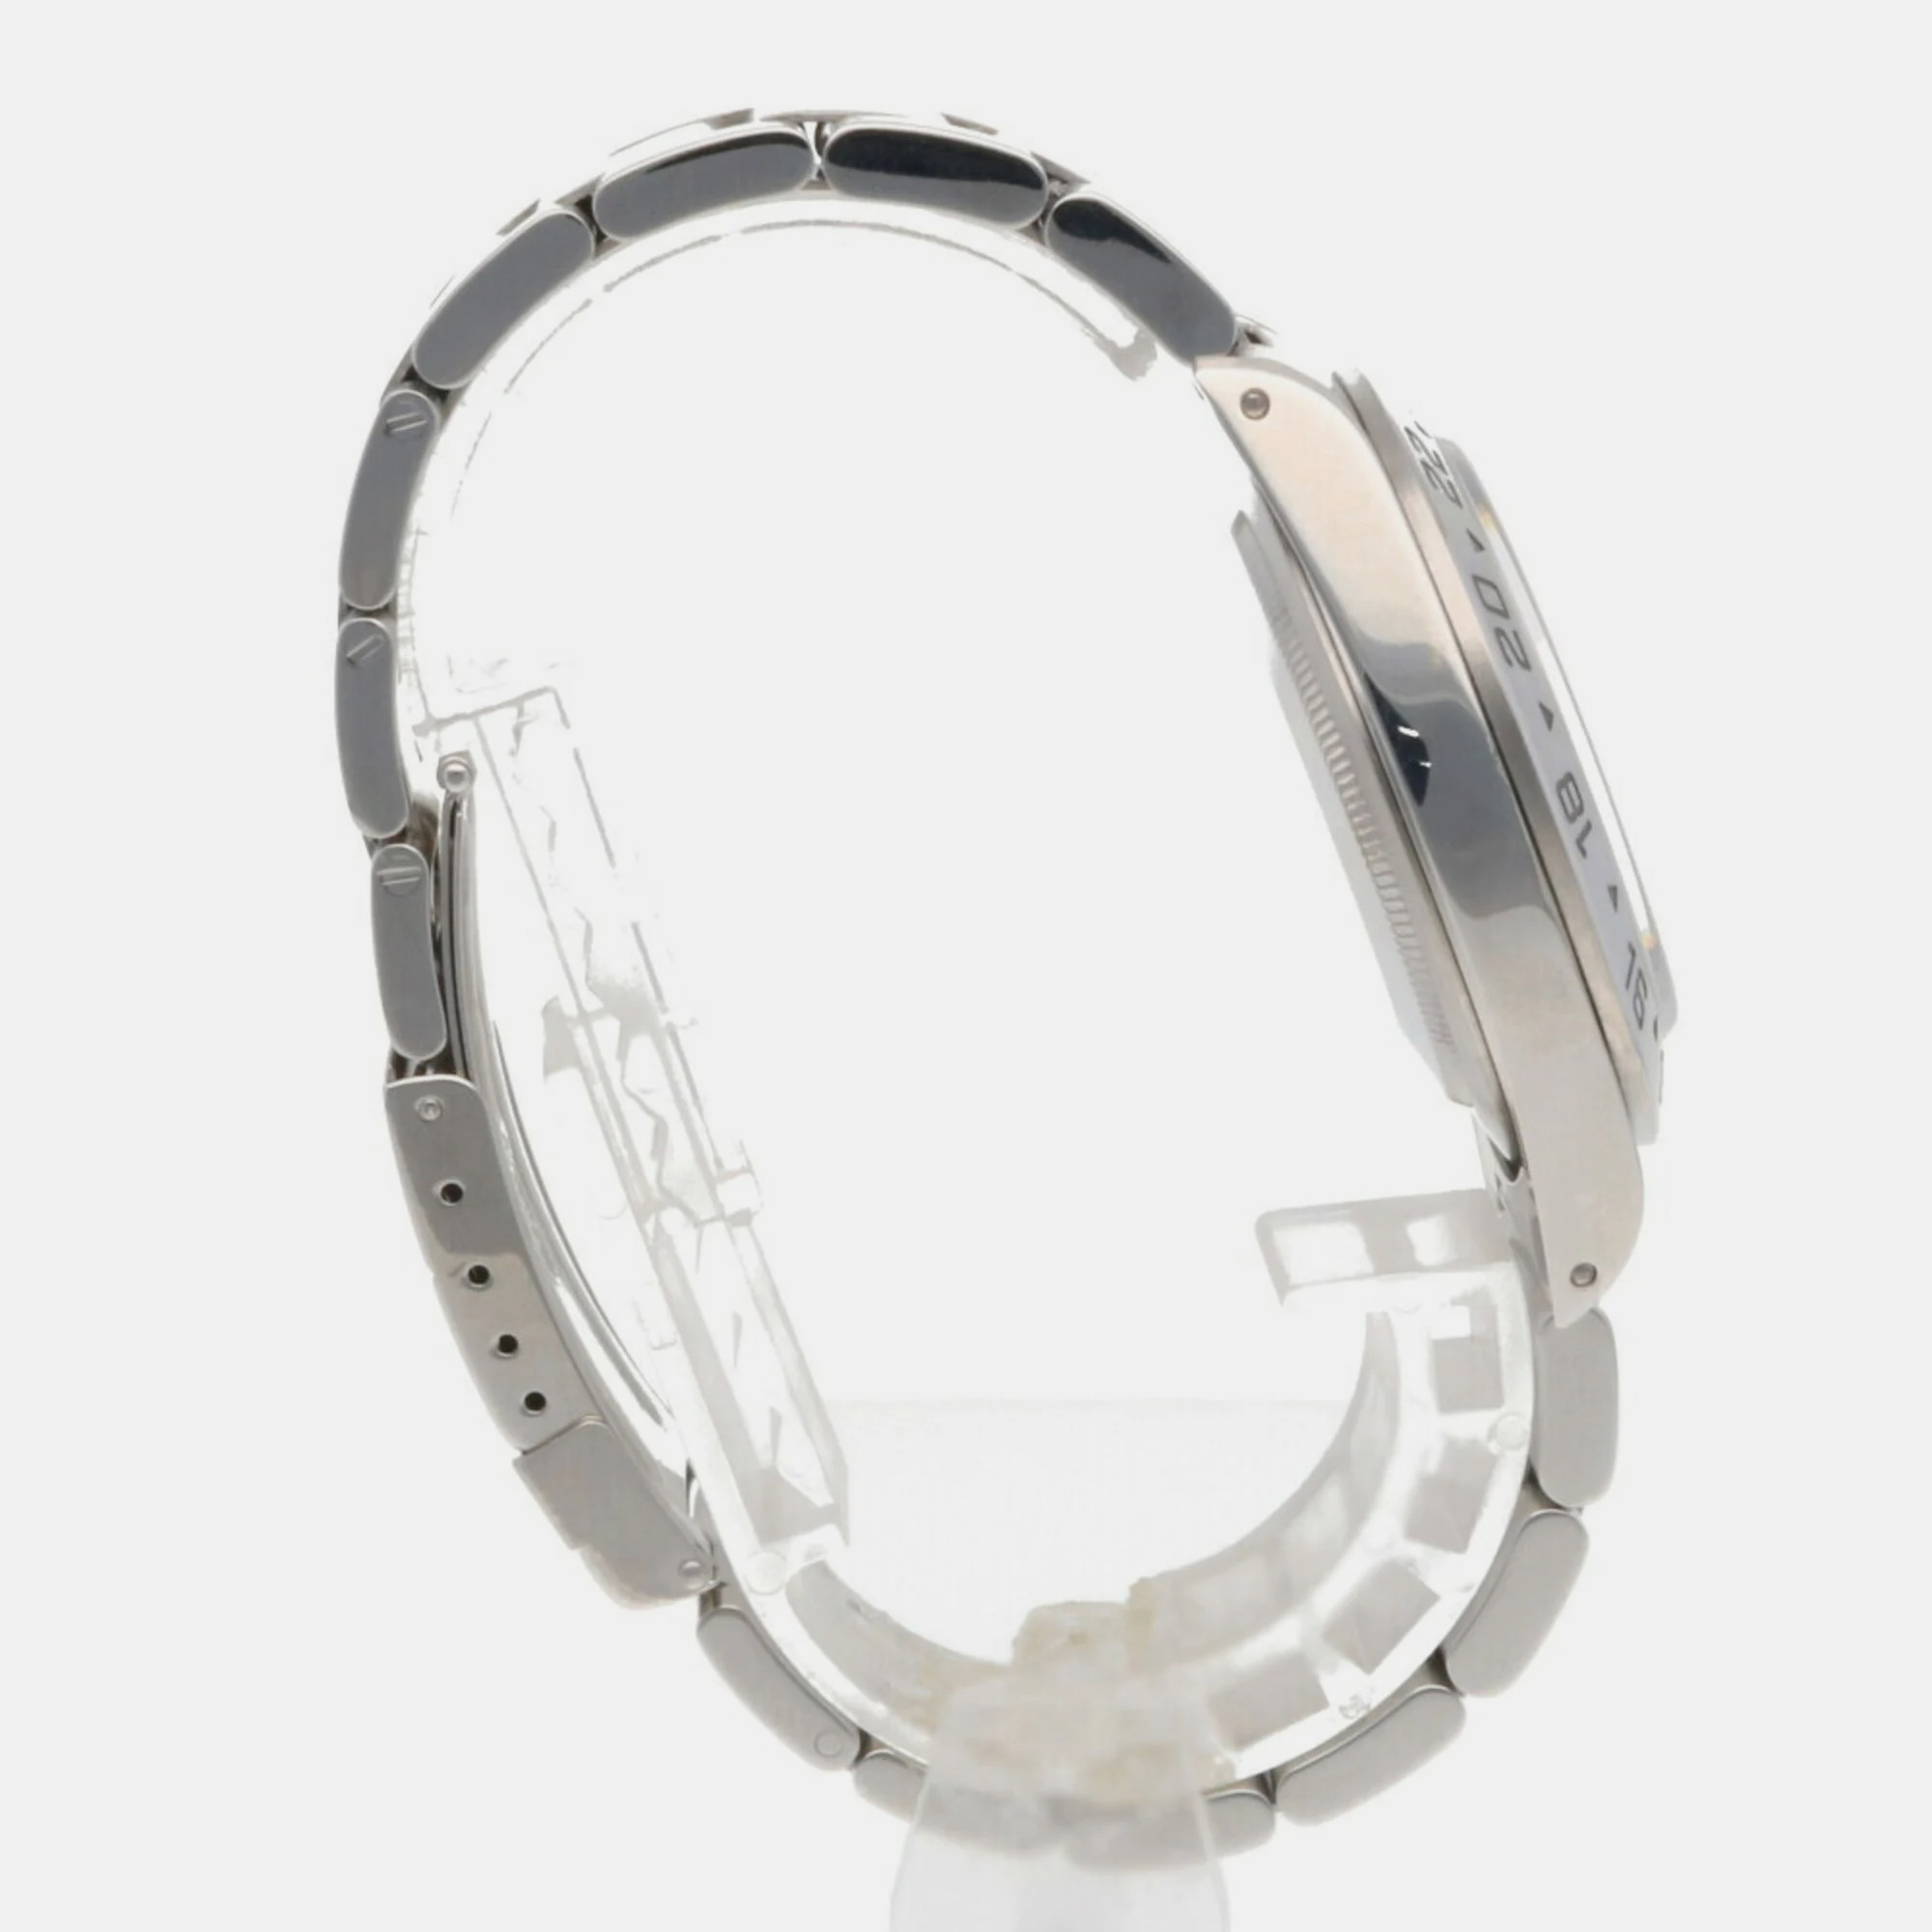 Rolex White Stainless Steel Explorer 16570 Automatic Men's Wristwatch 41 Mm